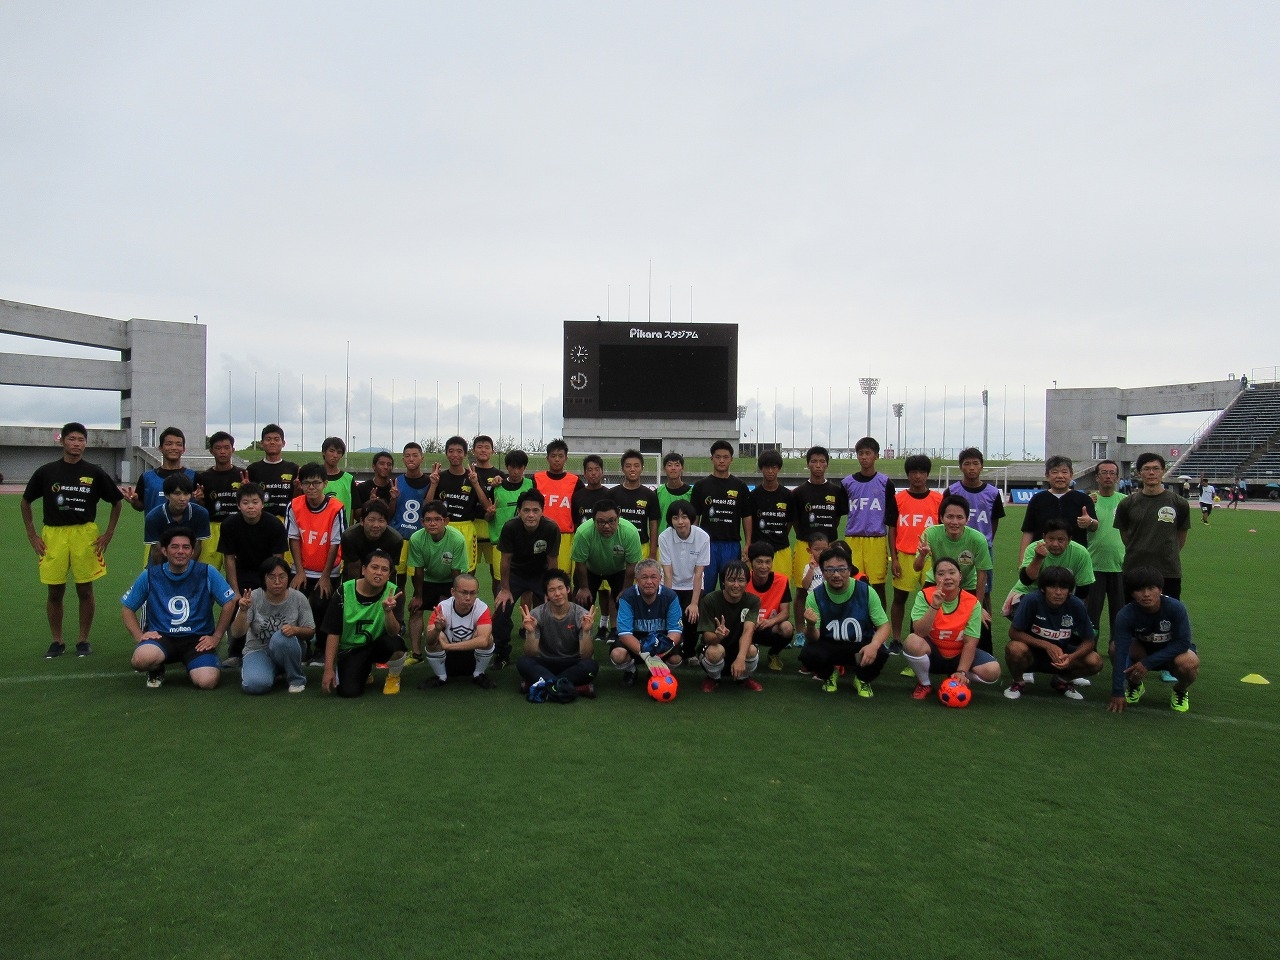 JFAフットボールデー 香川県丸亀市のPikaraスタジアムに140人が参加！